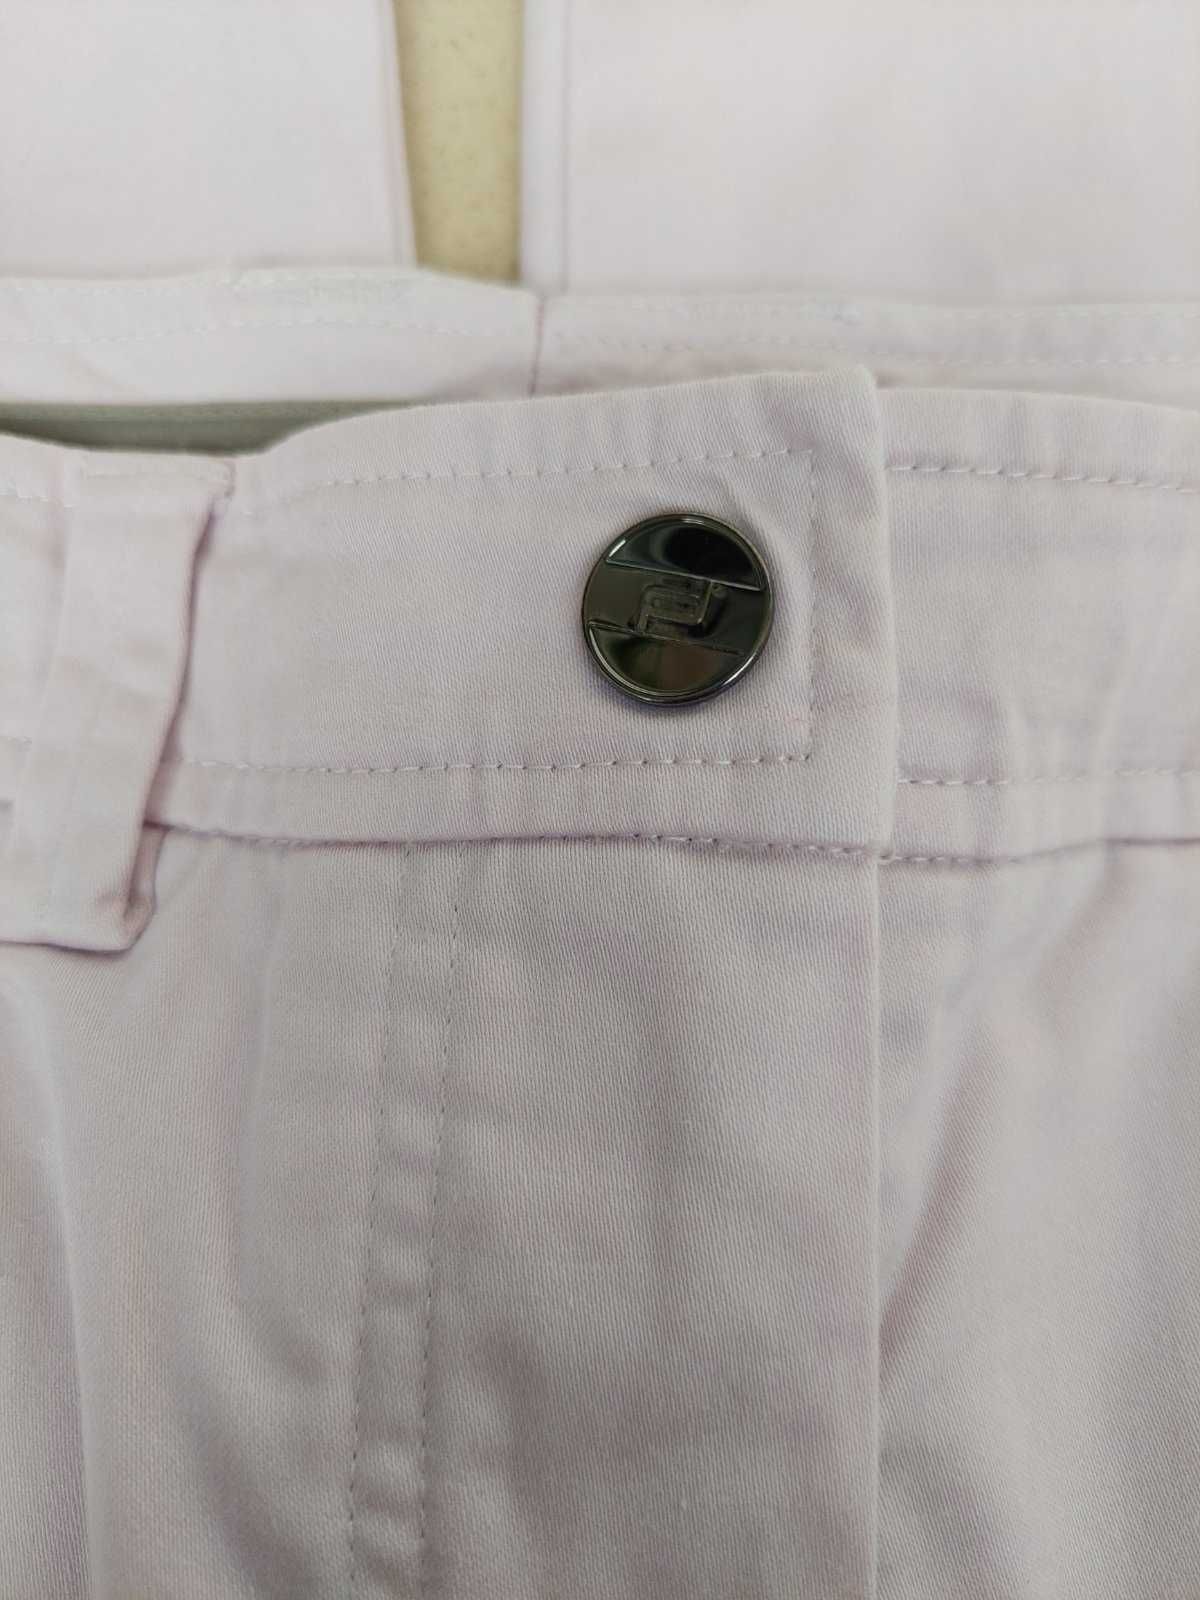 ADIDAS PORSCHE DESING-Оригинален памучен панталон-размер М